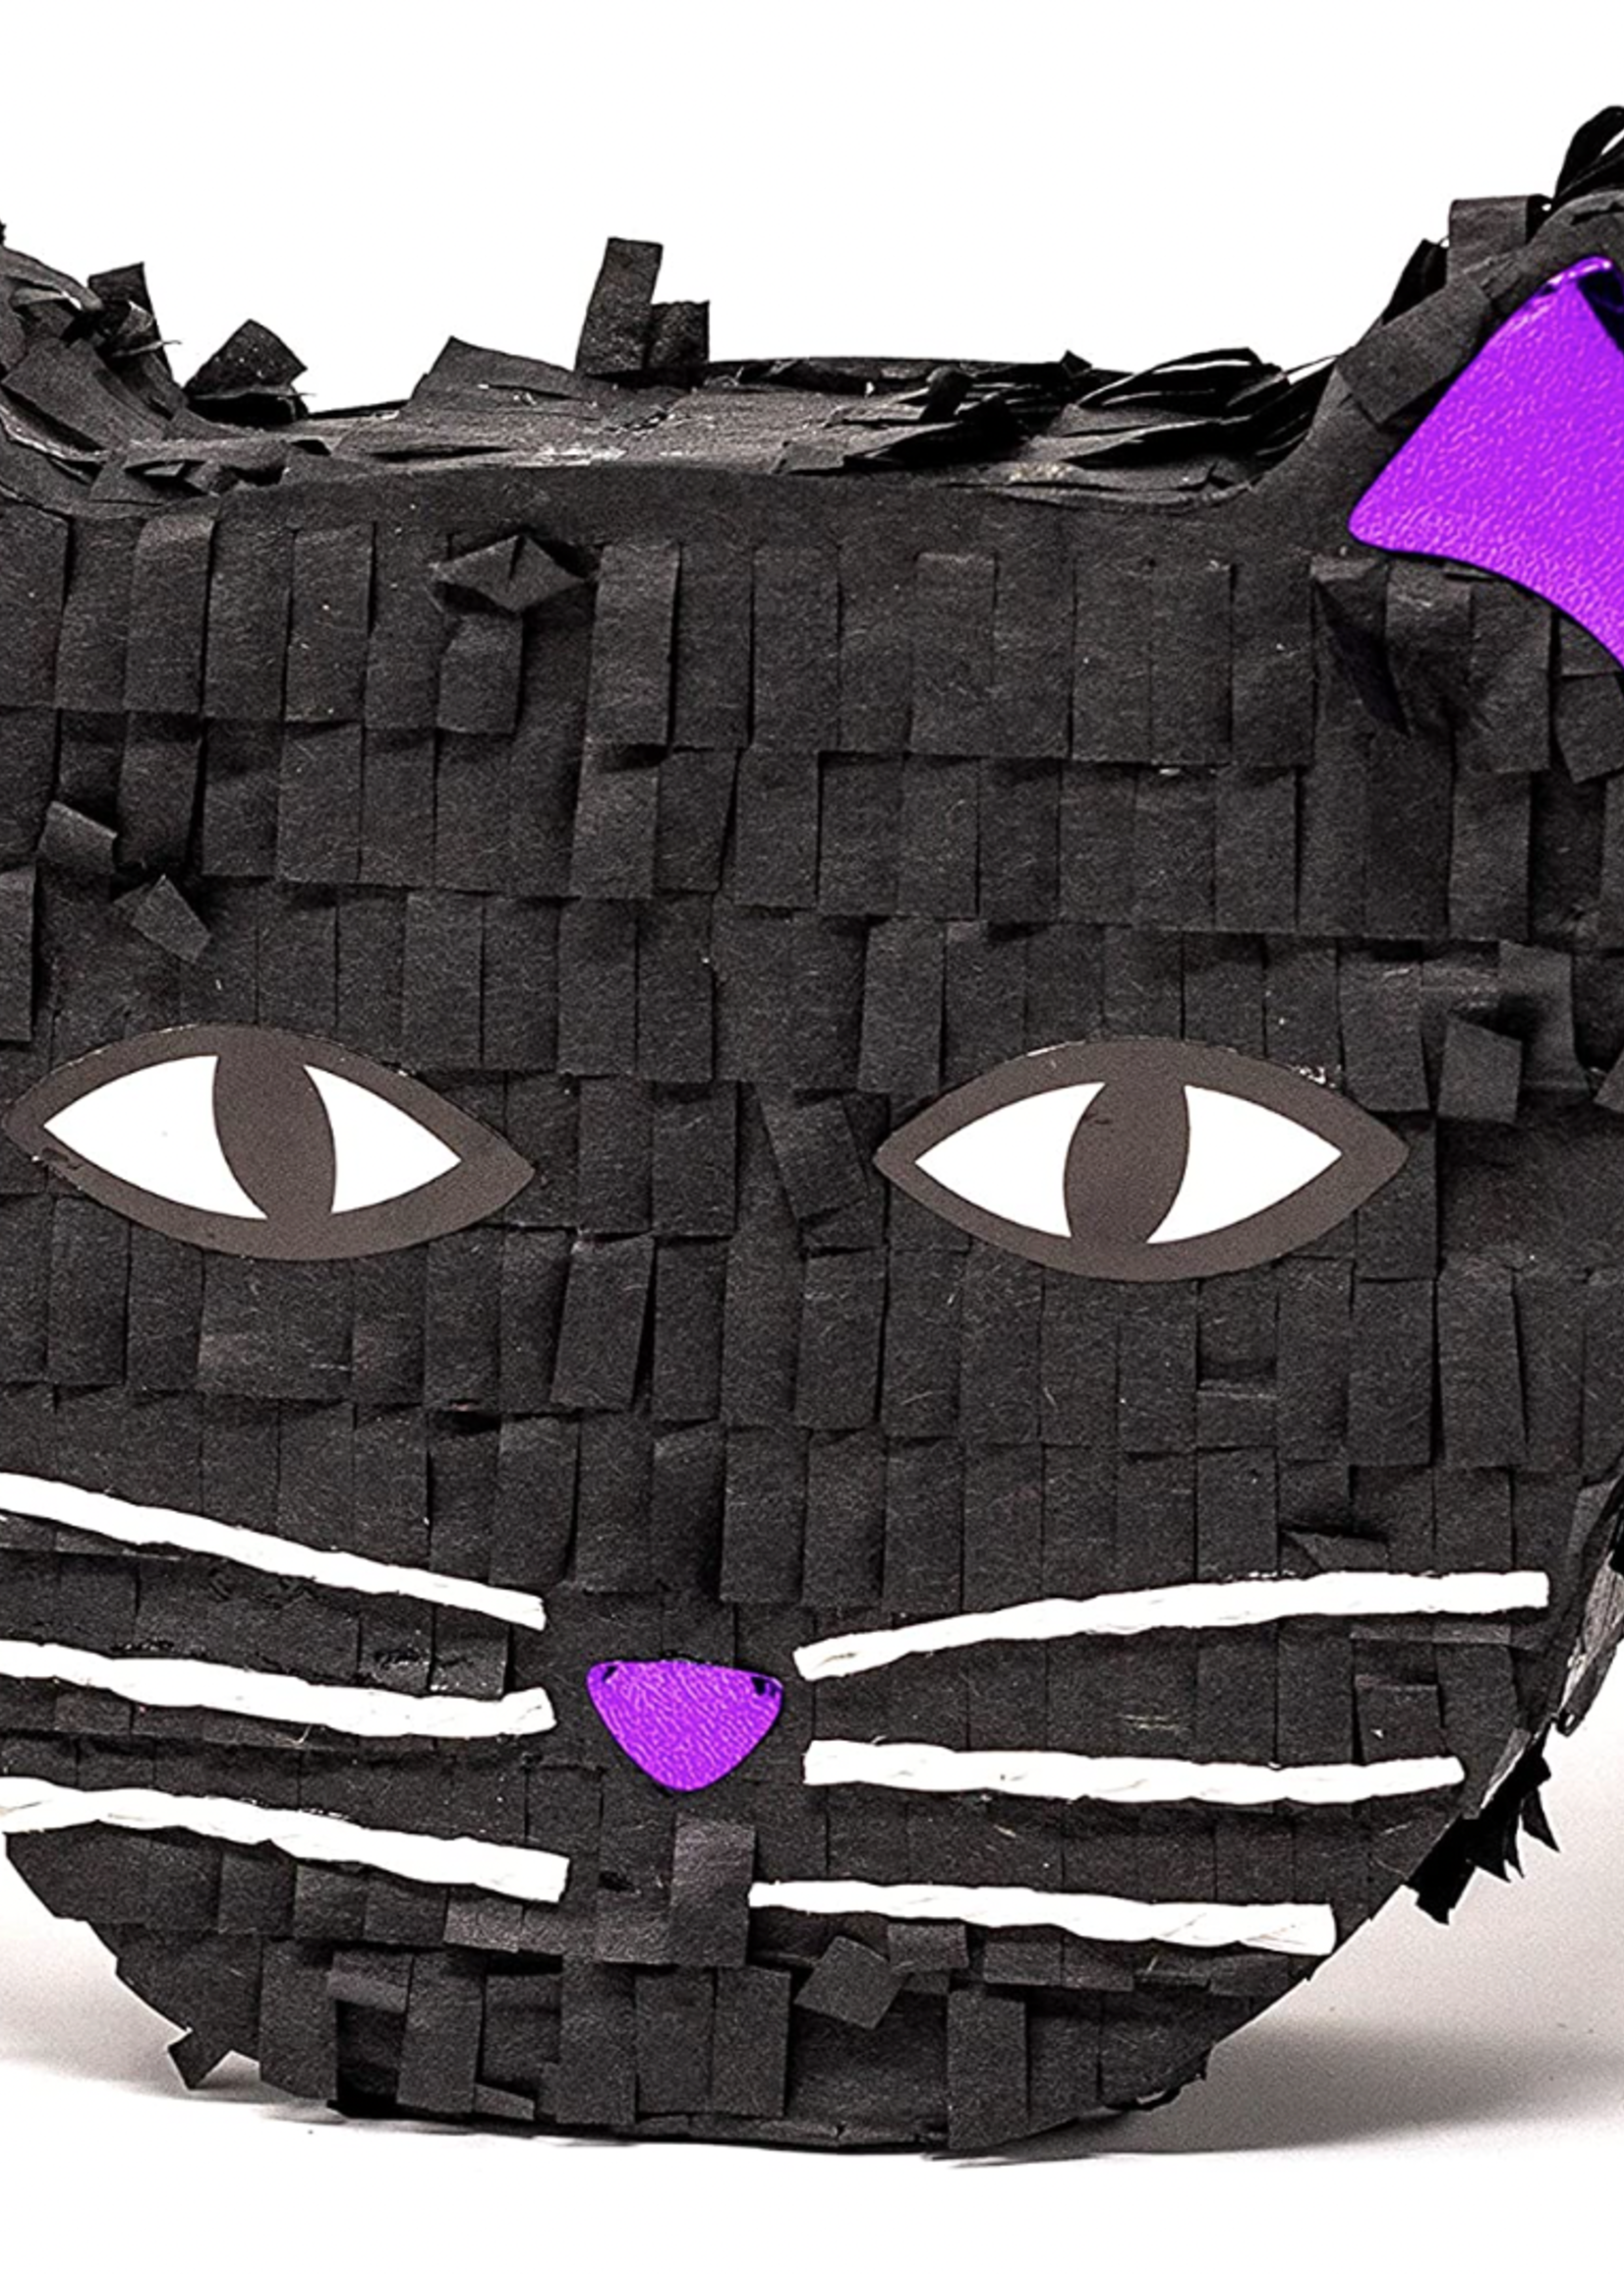 Creative Twist Events Black Cat mini pinata